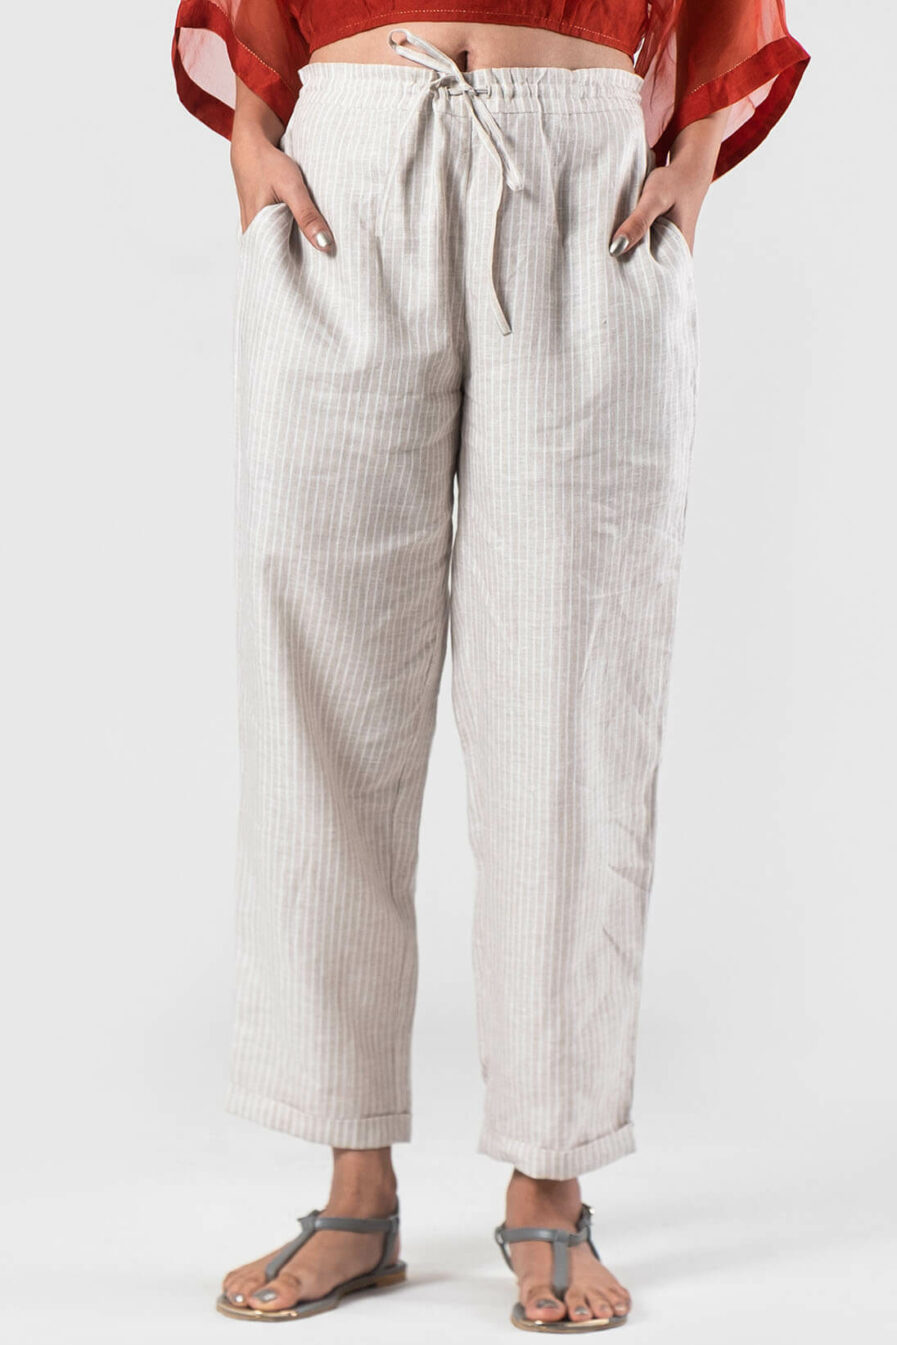 Anavila Natural Striped linen trouser